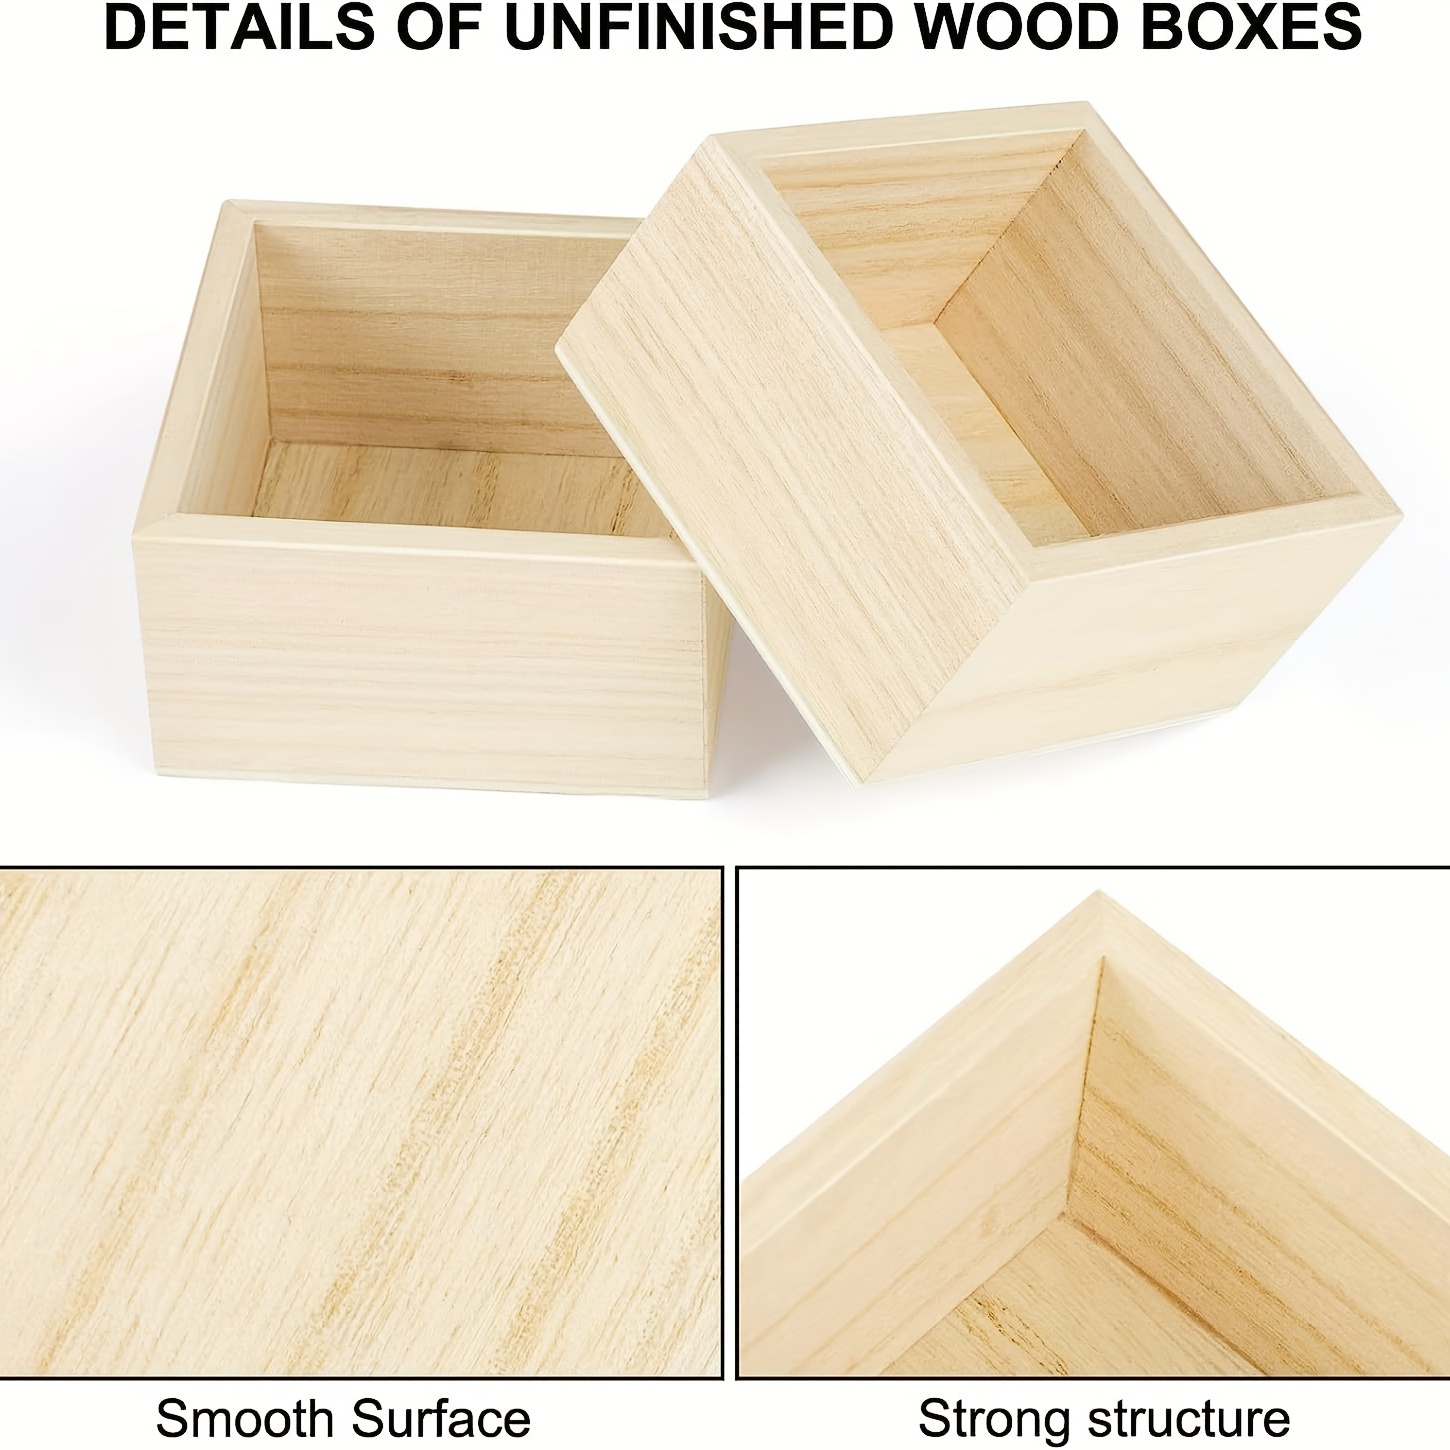  Voittozege Paquete de 12 cajas de madera pequeñas sin terminar,  caja cuadrada de madera rústica de 4 pulgadas para manualidades, caja de  madera, centro de mesa, cajas de madera cuadradas pequeñas 